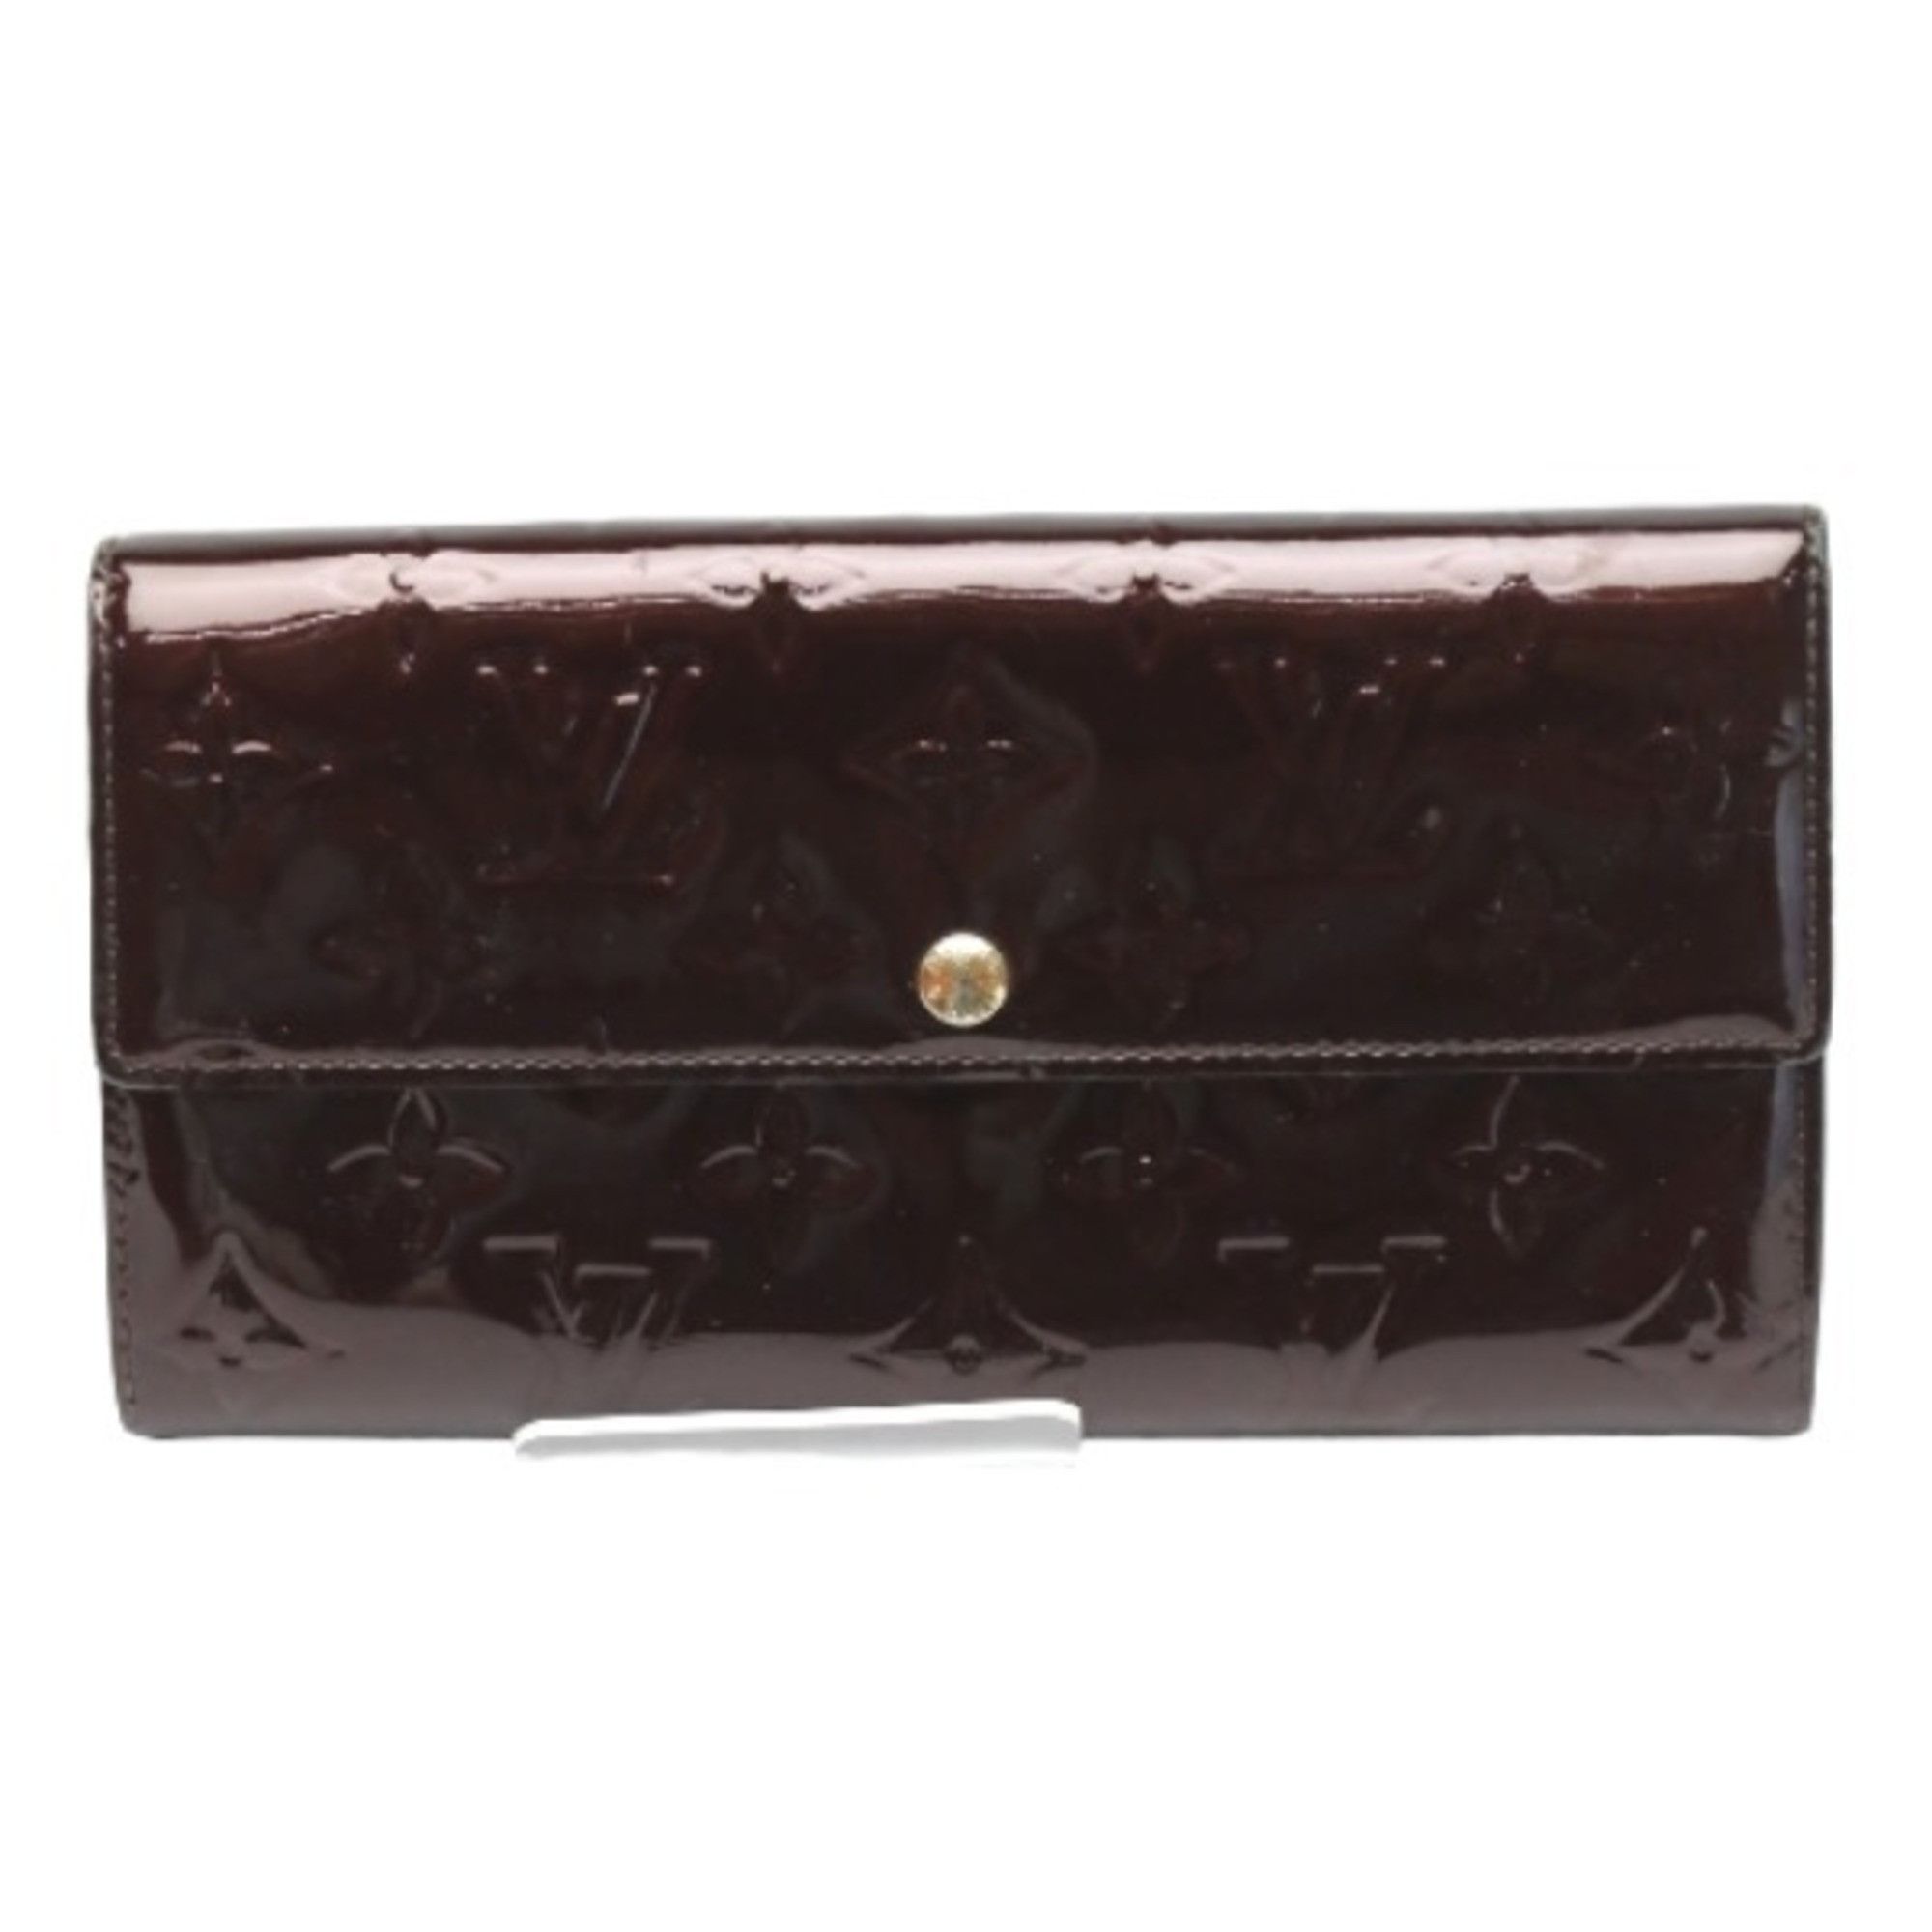 Shop Louis Vuitton Zippy Xl Wallet (PORTEFEUILLE ZIPPY XL, M61698